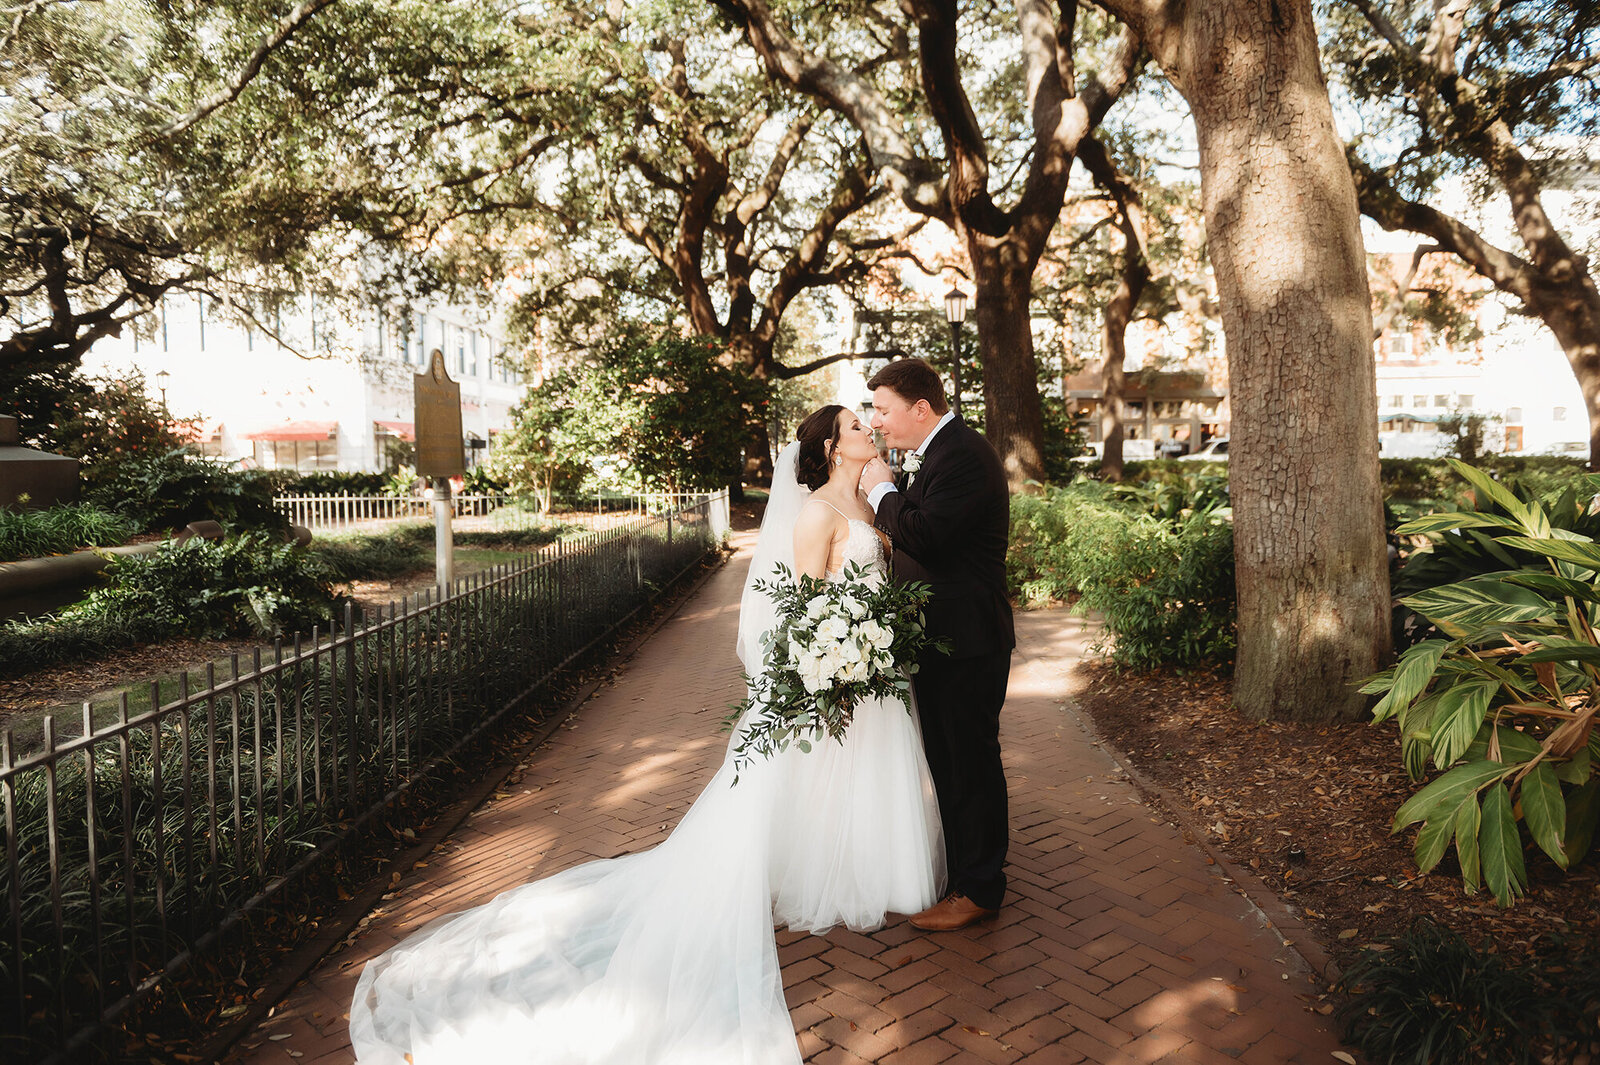 Newlyweds kiss during portraits during their Micro-Wedding in Savannah, Ga.